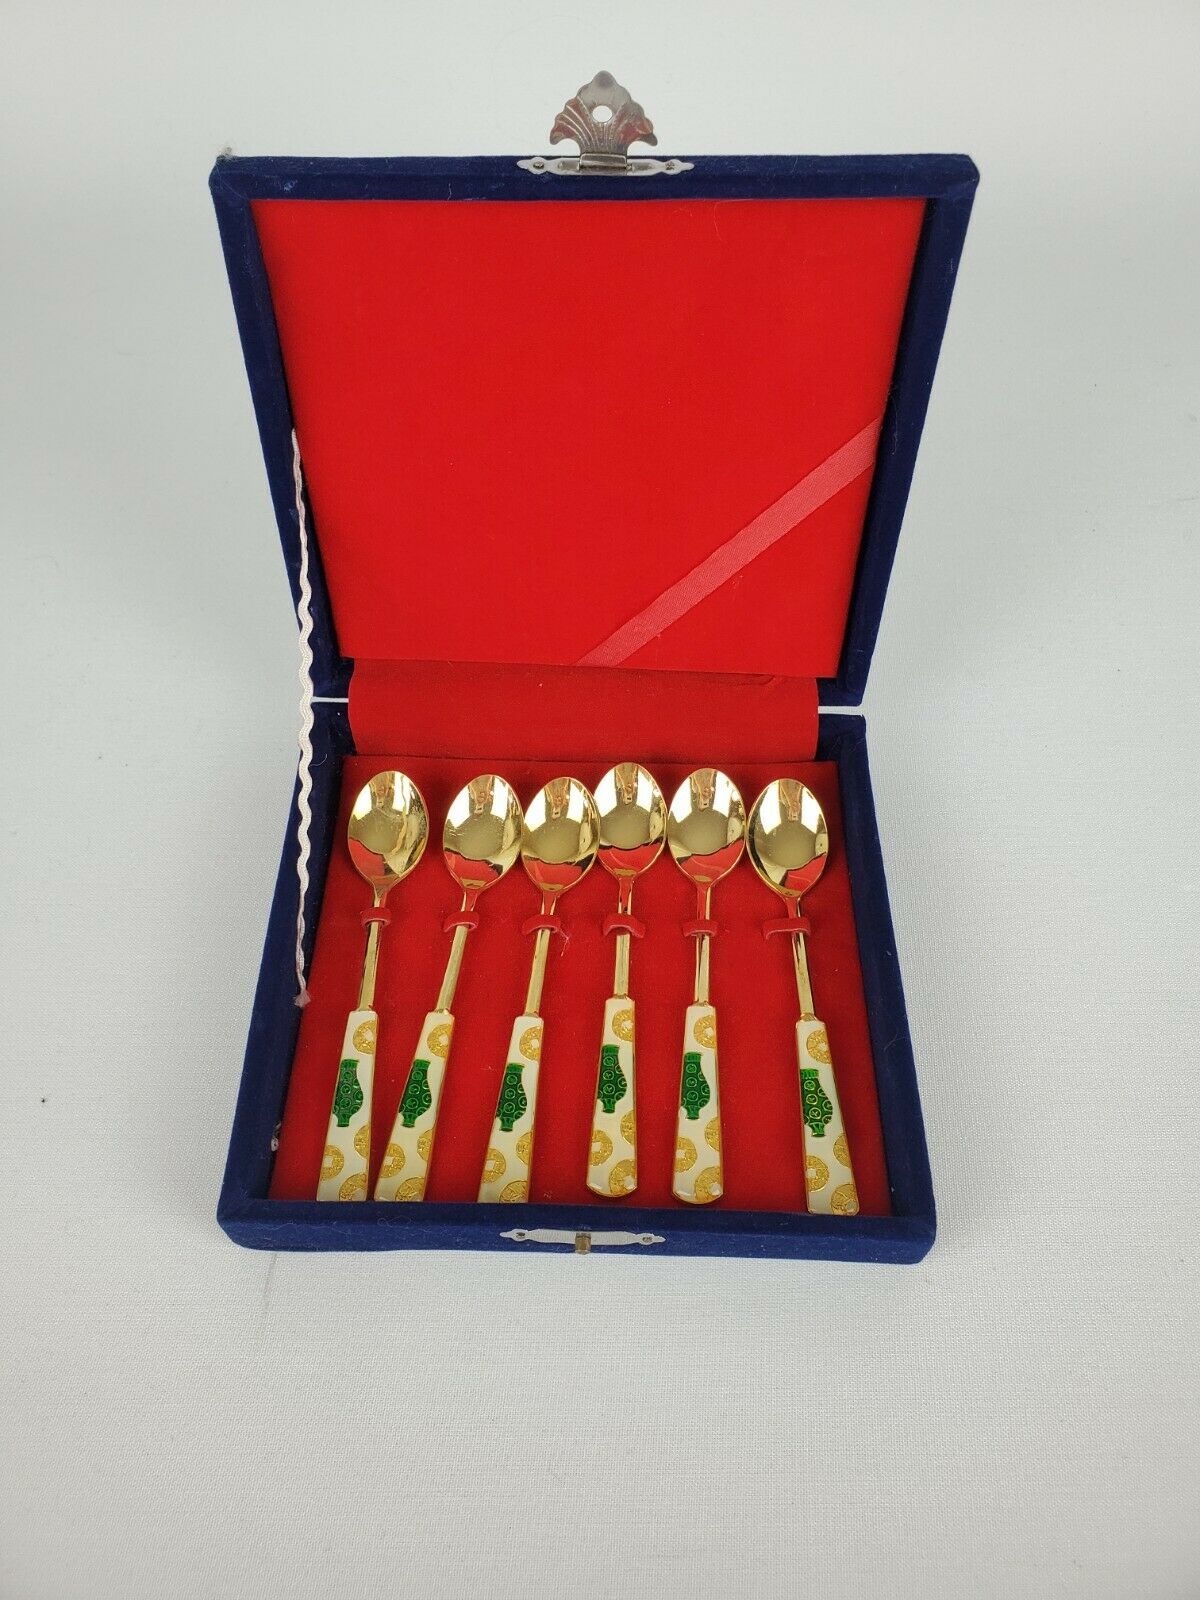 Korean Korea Decorative Gold Spoon Set Of 6 With Box 24k G.p. Gold Plate 4.75"